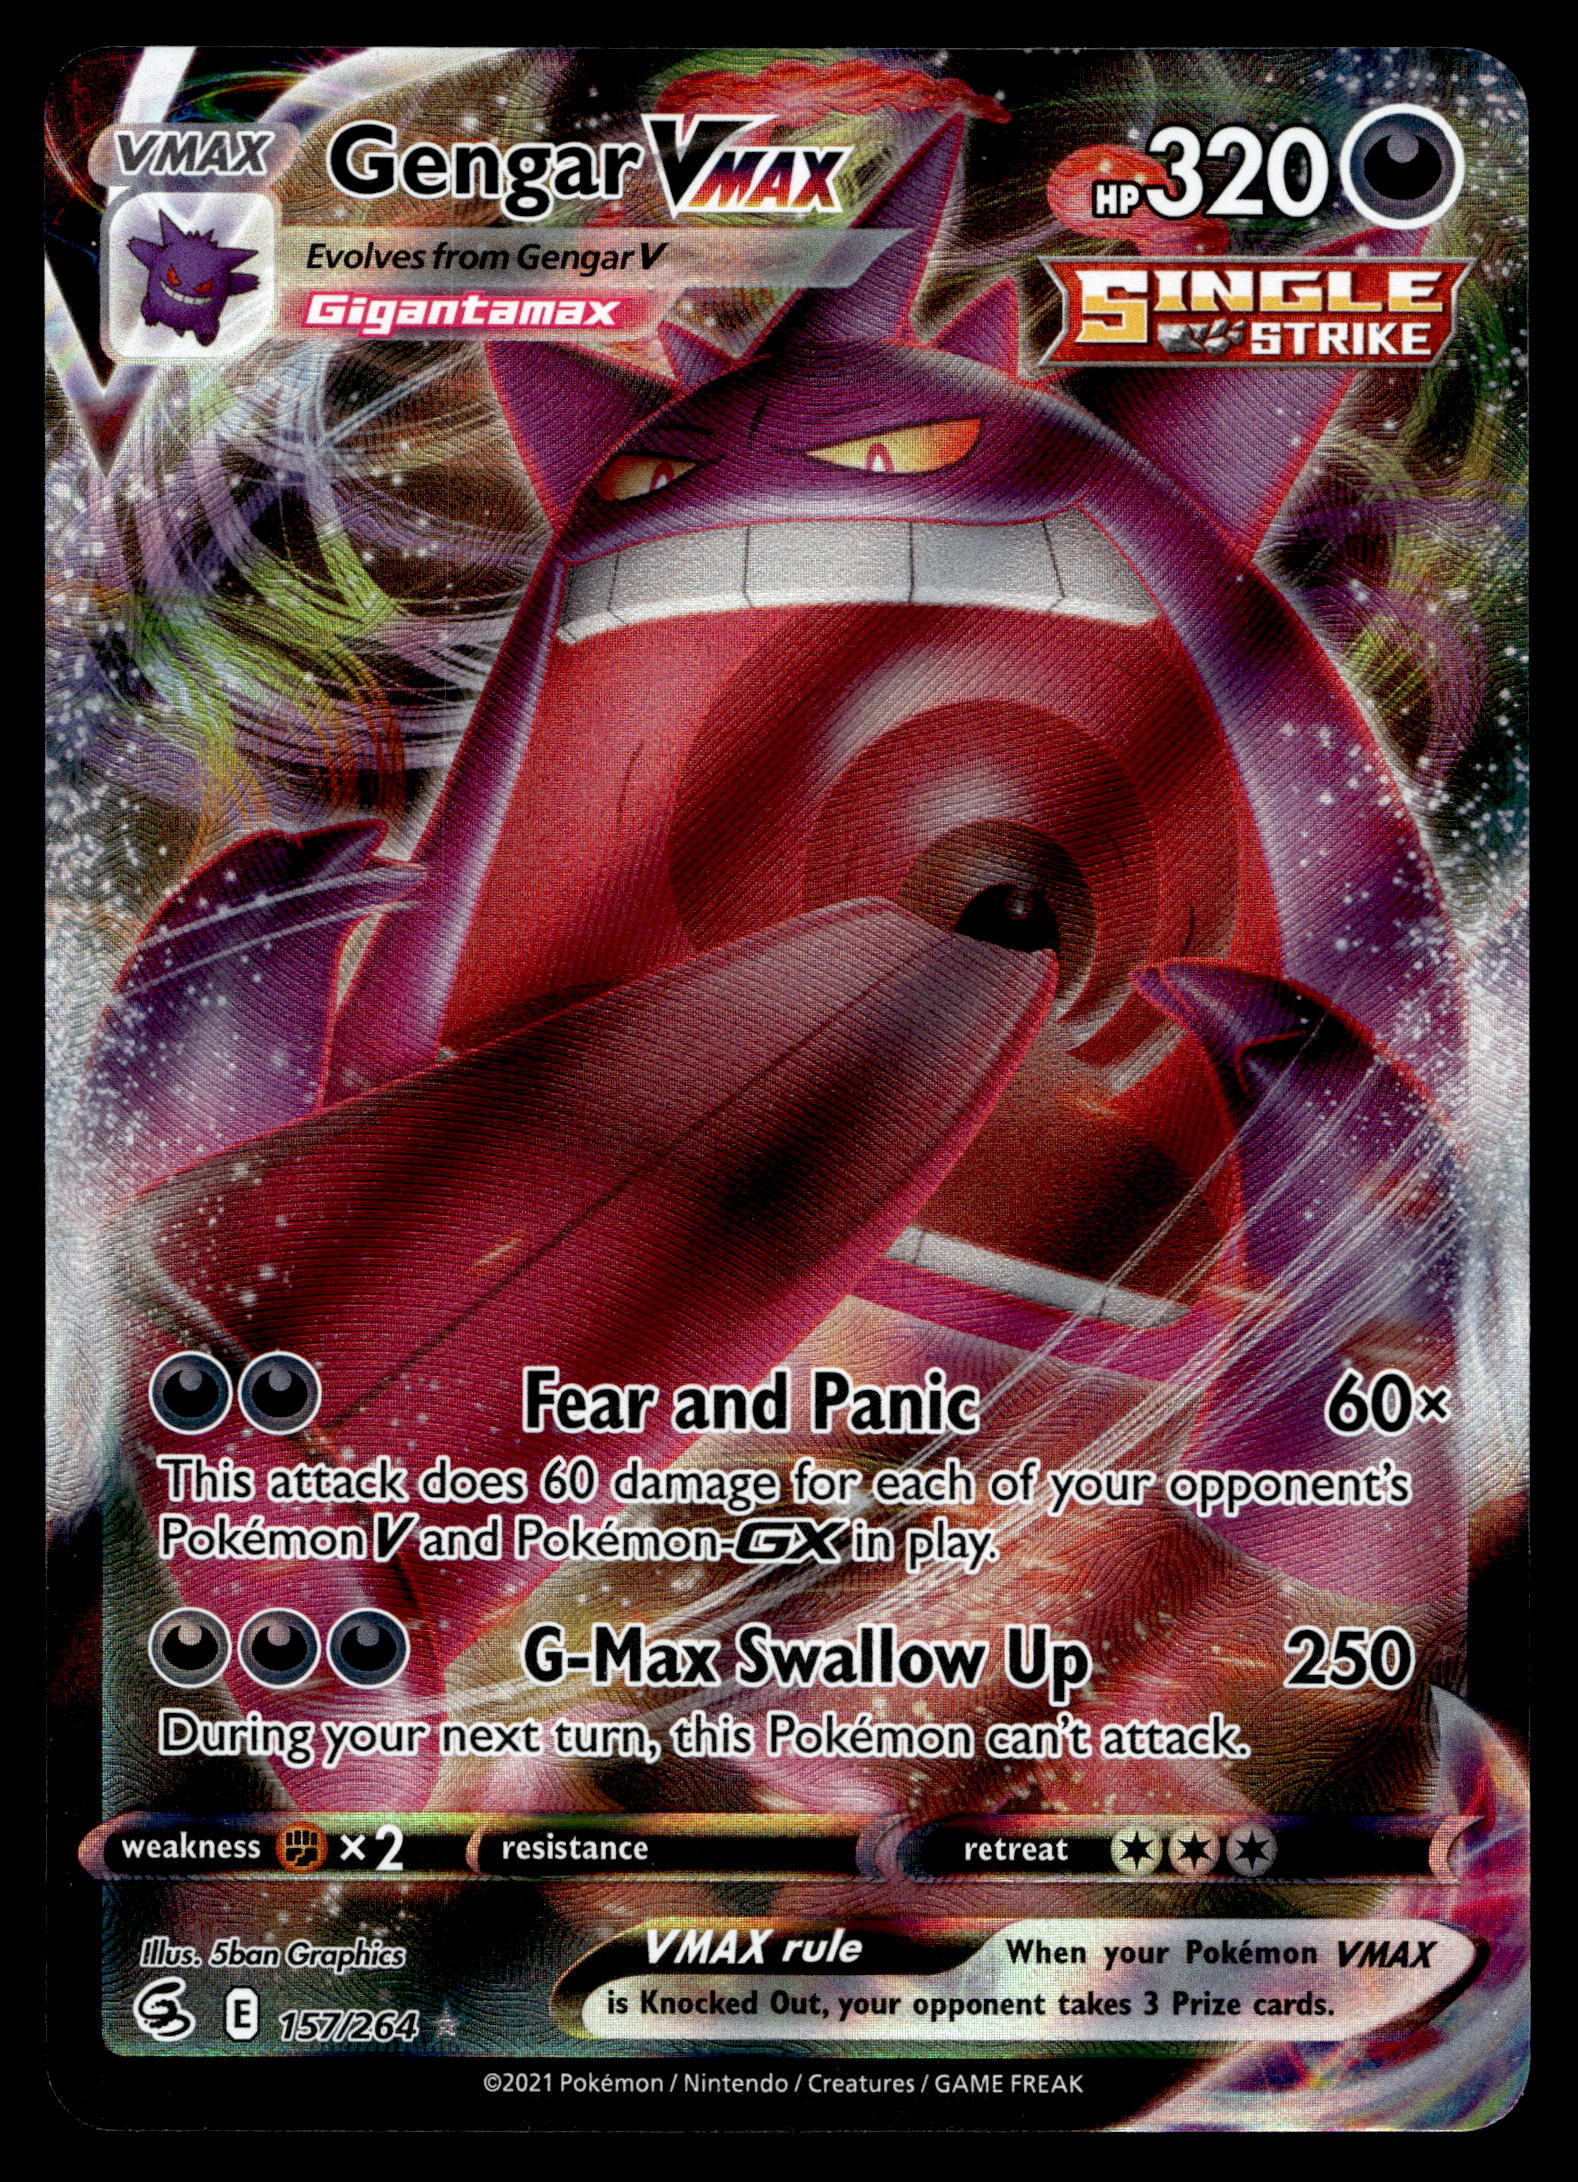 Pokemon Card GENGAR VMAX 157/264 Fusion Strike Full Art- Single